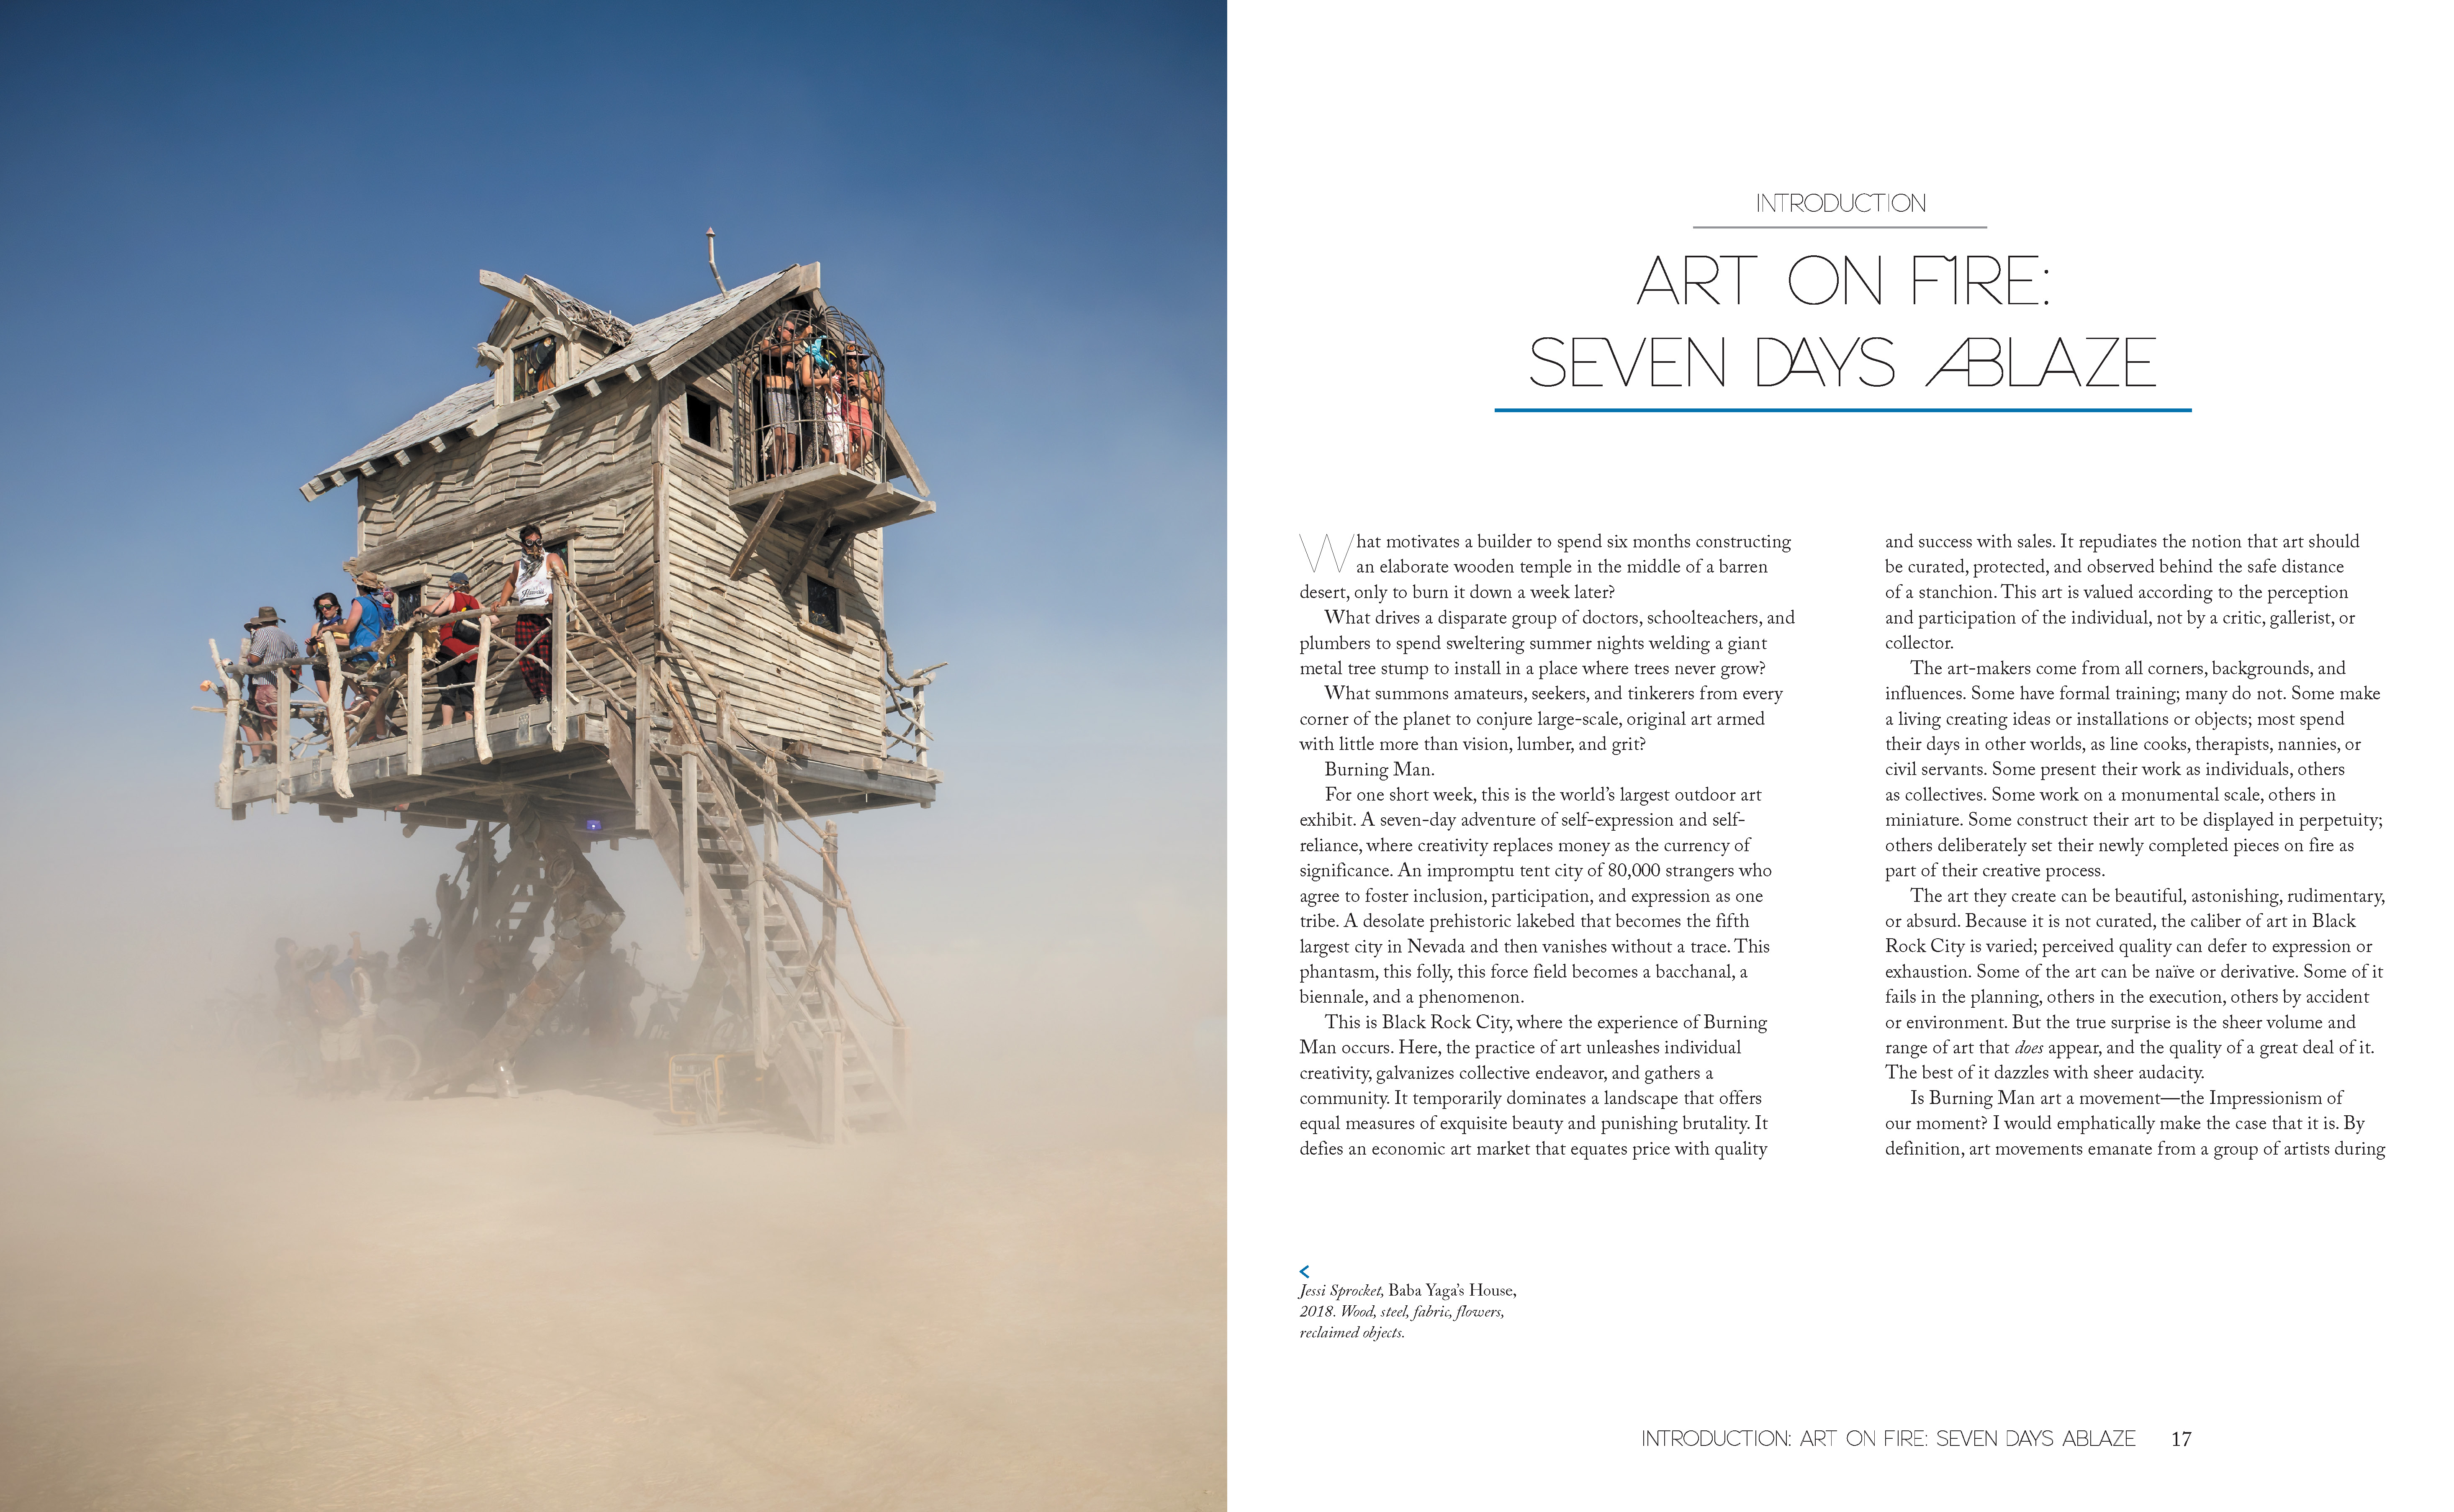 Burning Man: Art on Fire